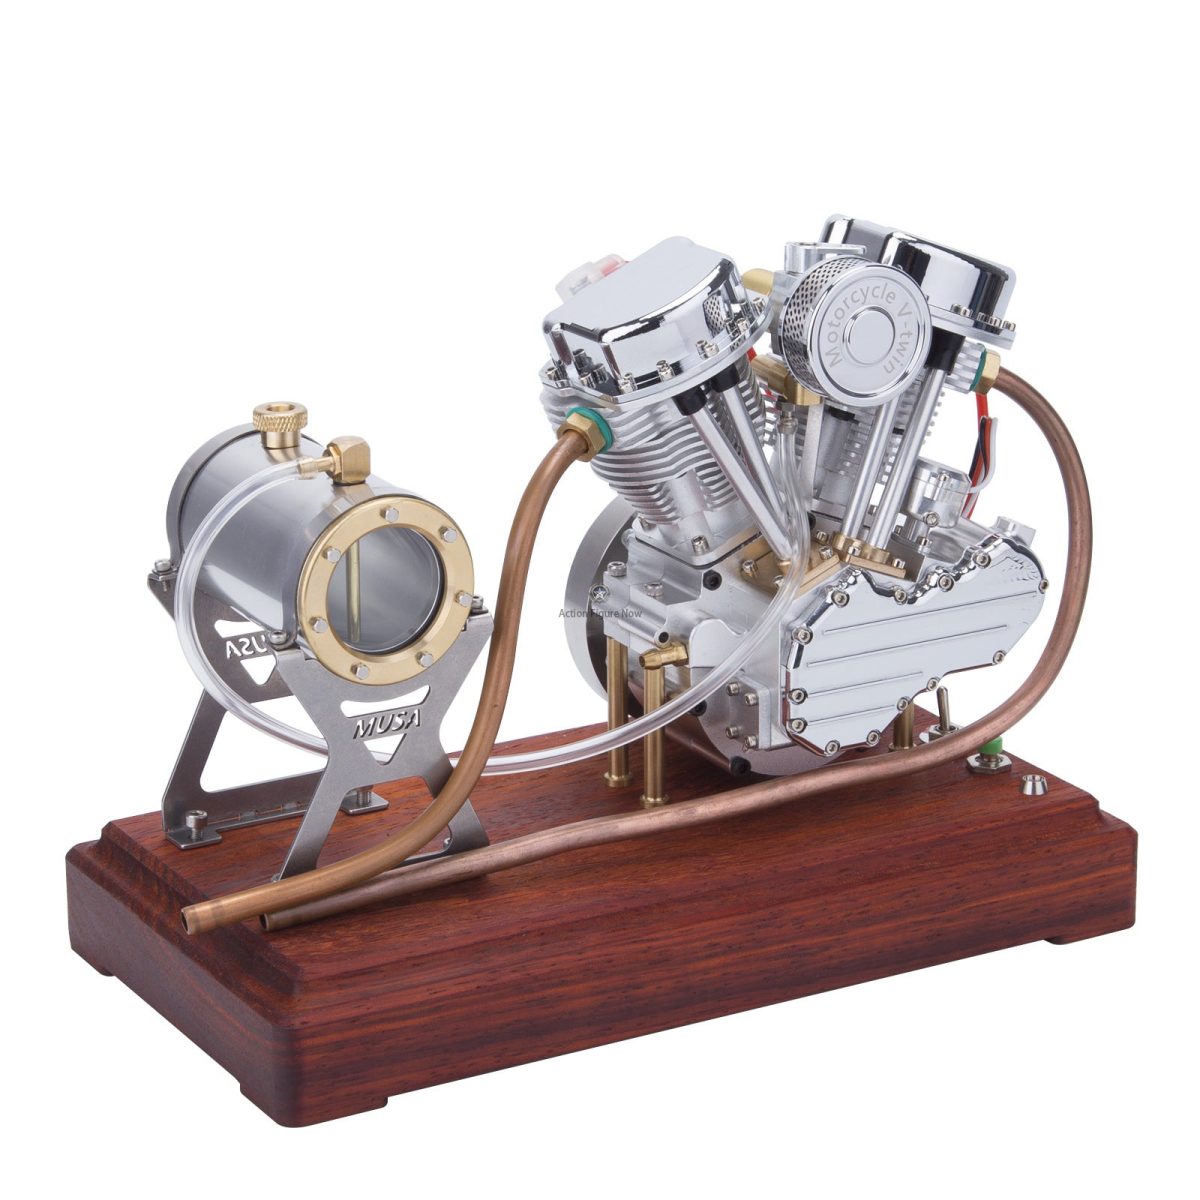 CISON FG-VT9 9cc Gasoline 4-Stroke Air-Cooled V-Twin Engine Upgrade Kit w/ Original Parts